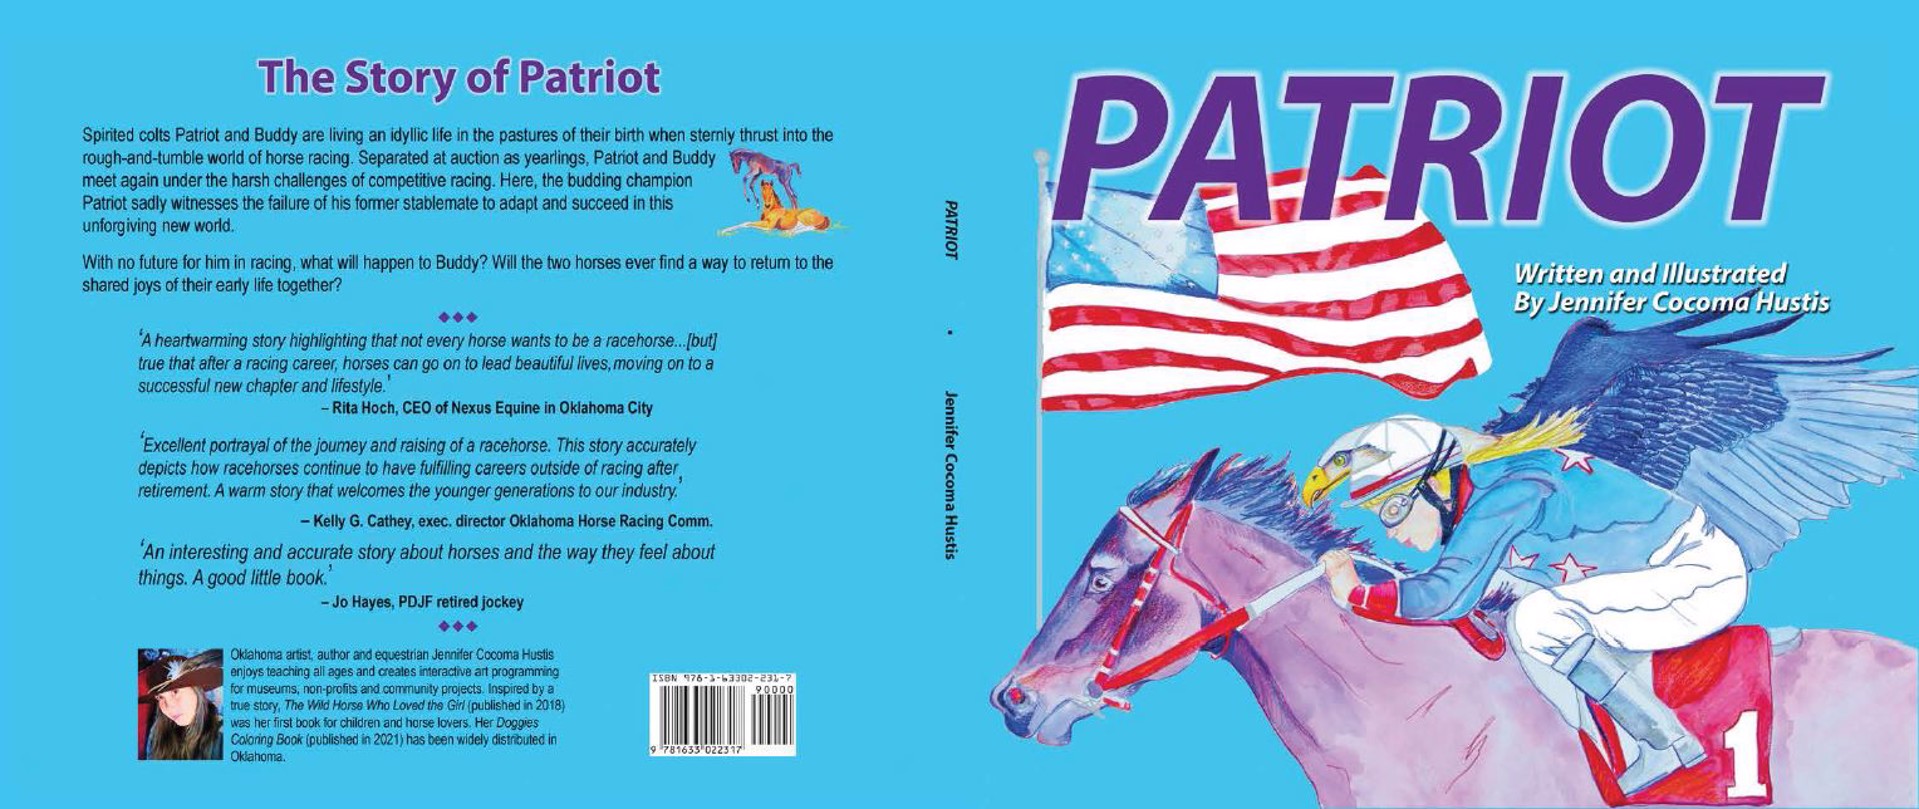 Patriot by Jennifer Cocoma Hustis